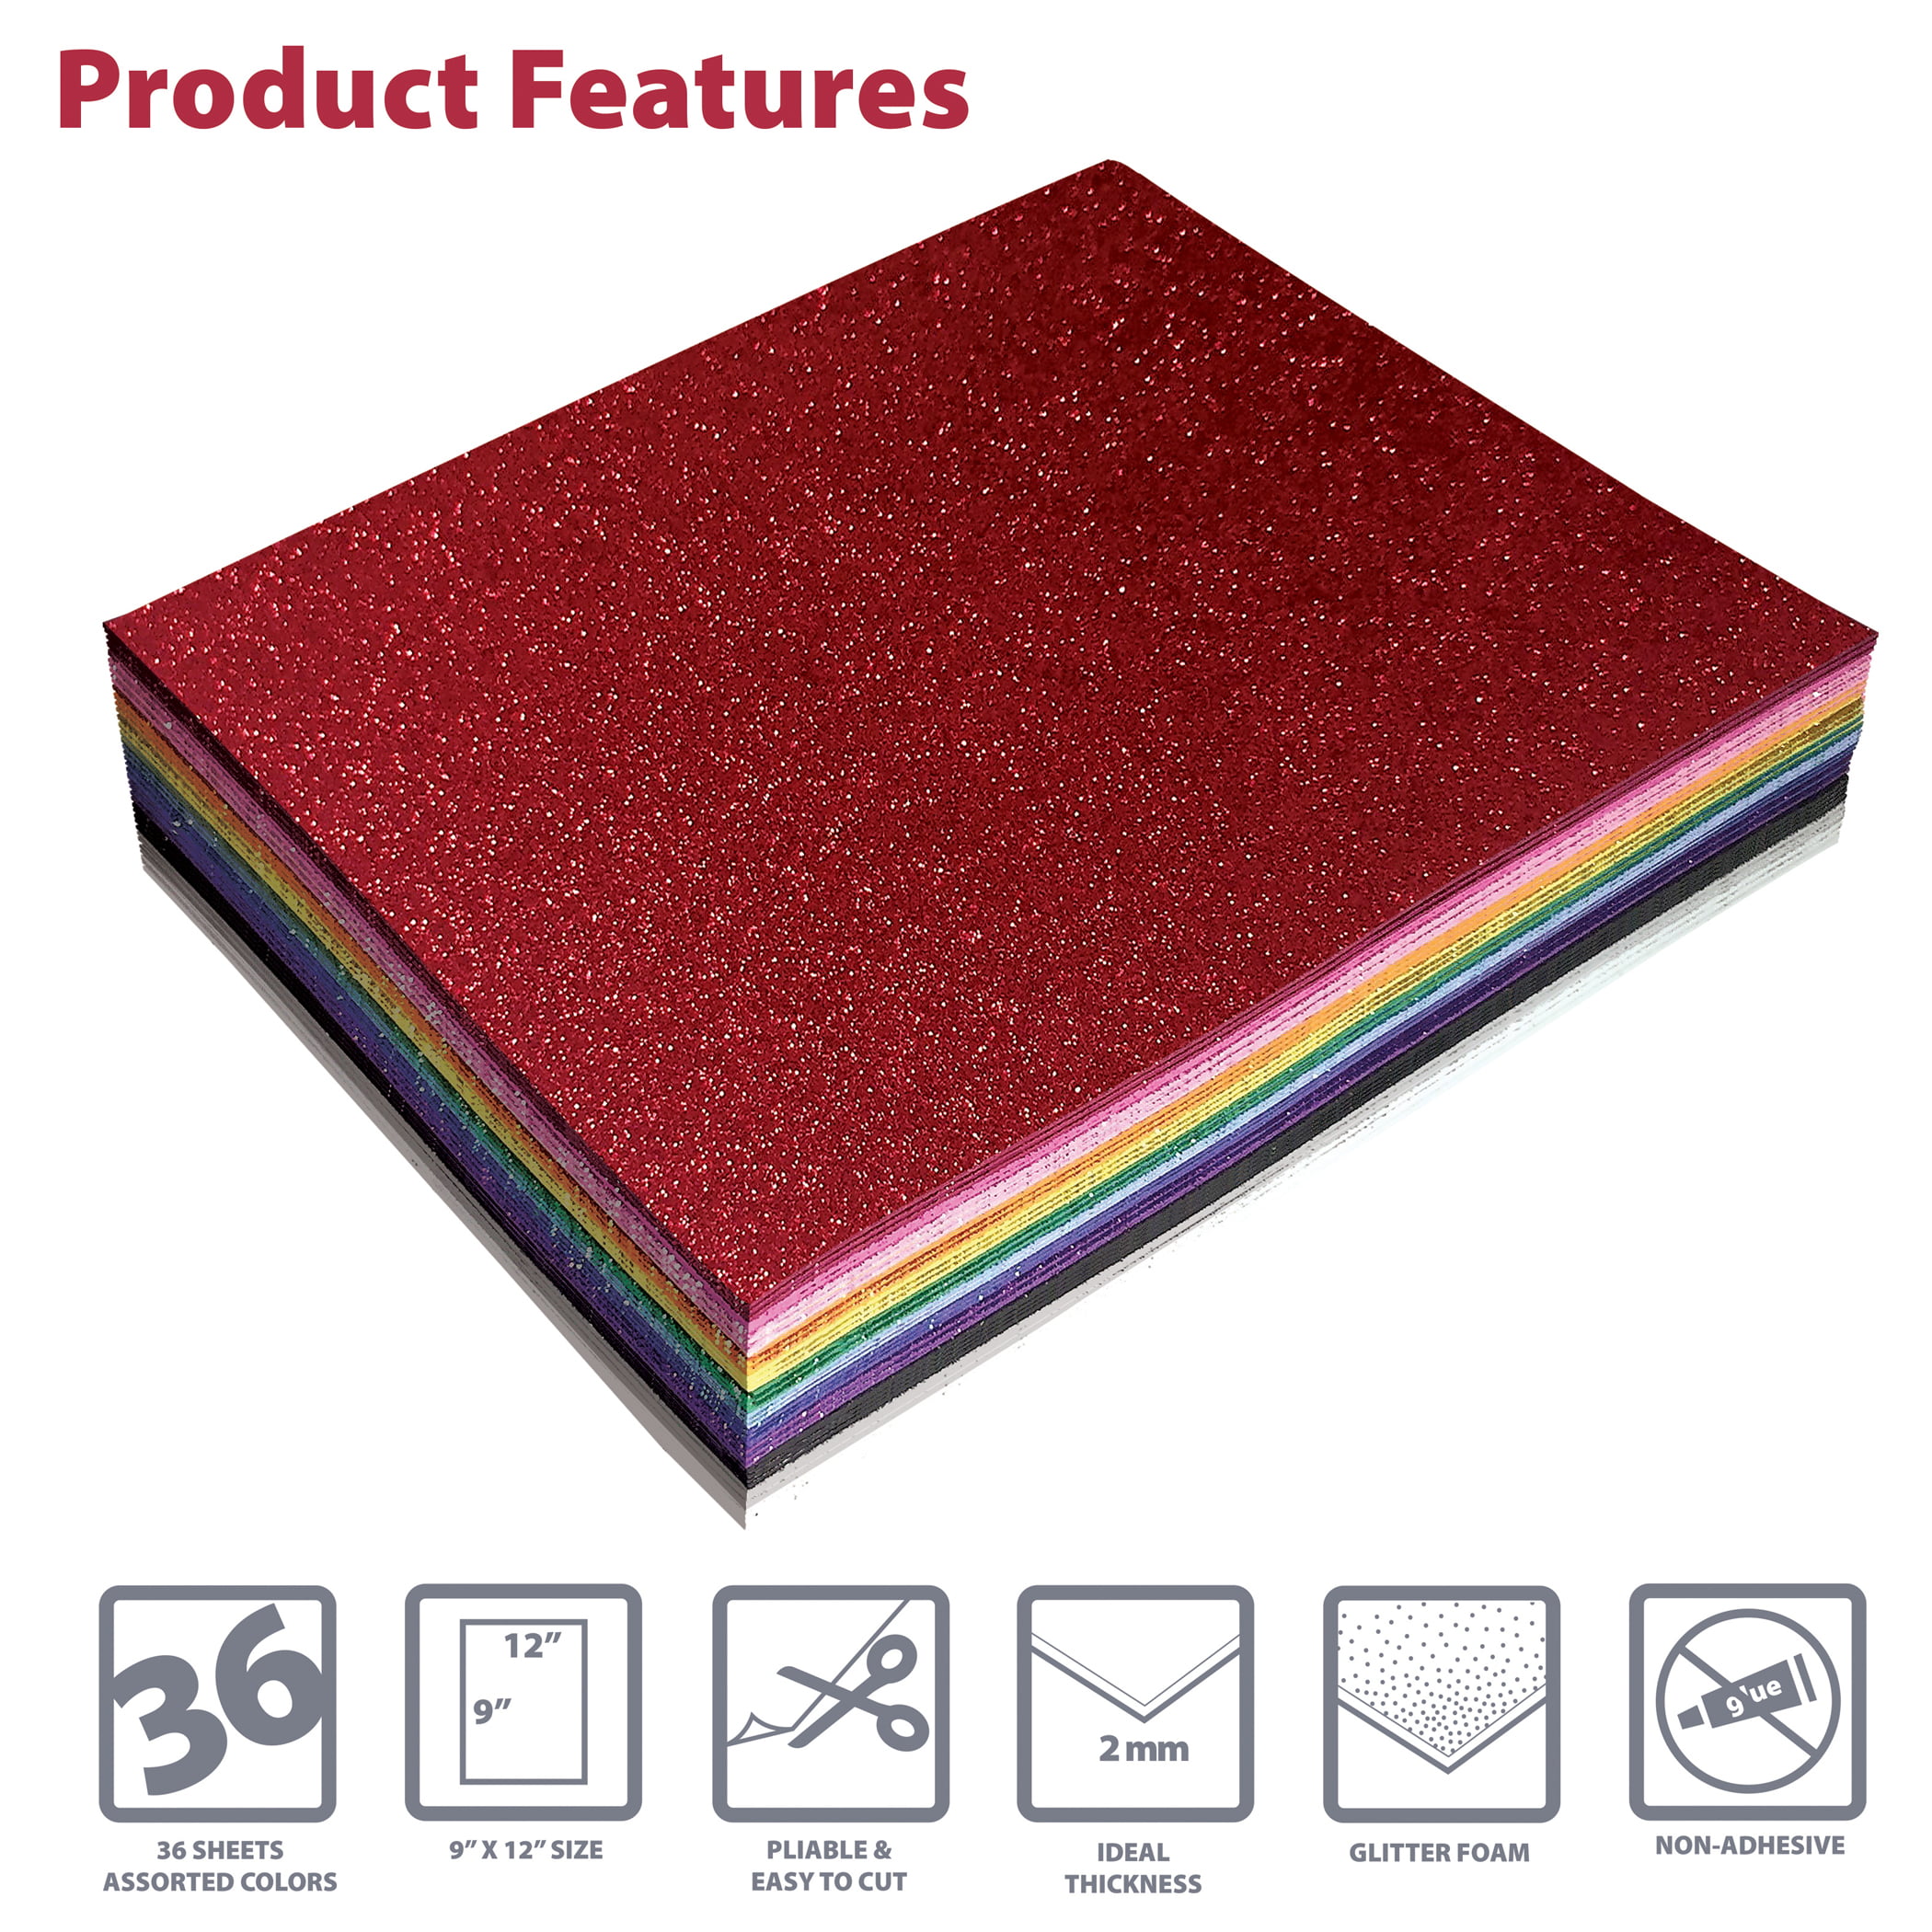 12 Packs: 55 ct. (660 total) Foam Glitter Heart Stickers by Creatology™